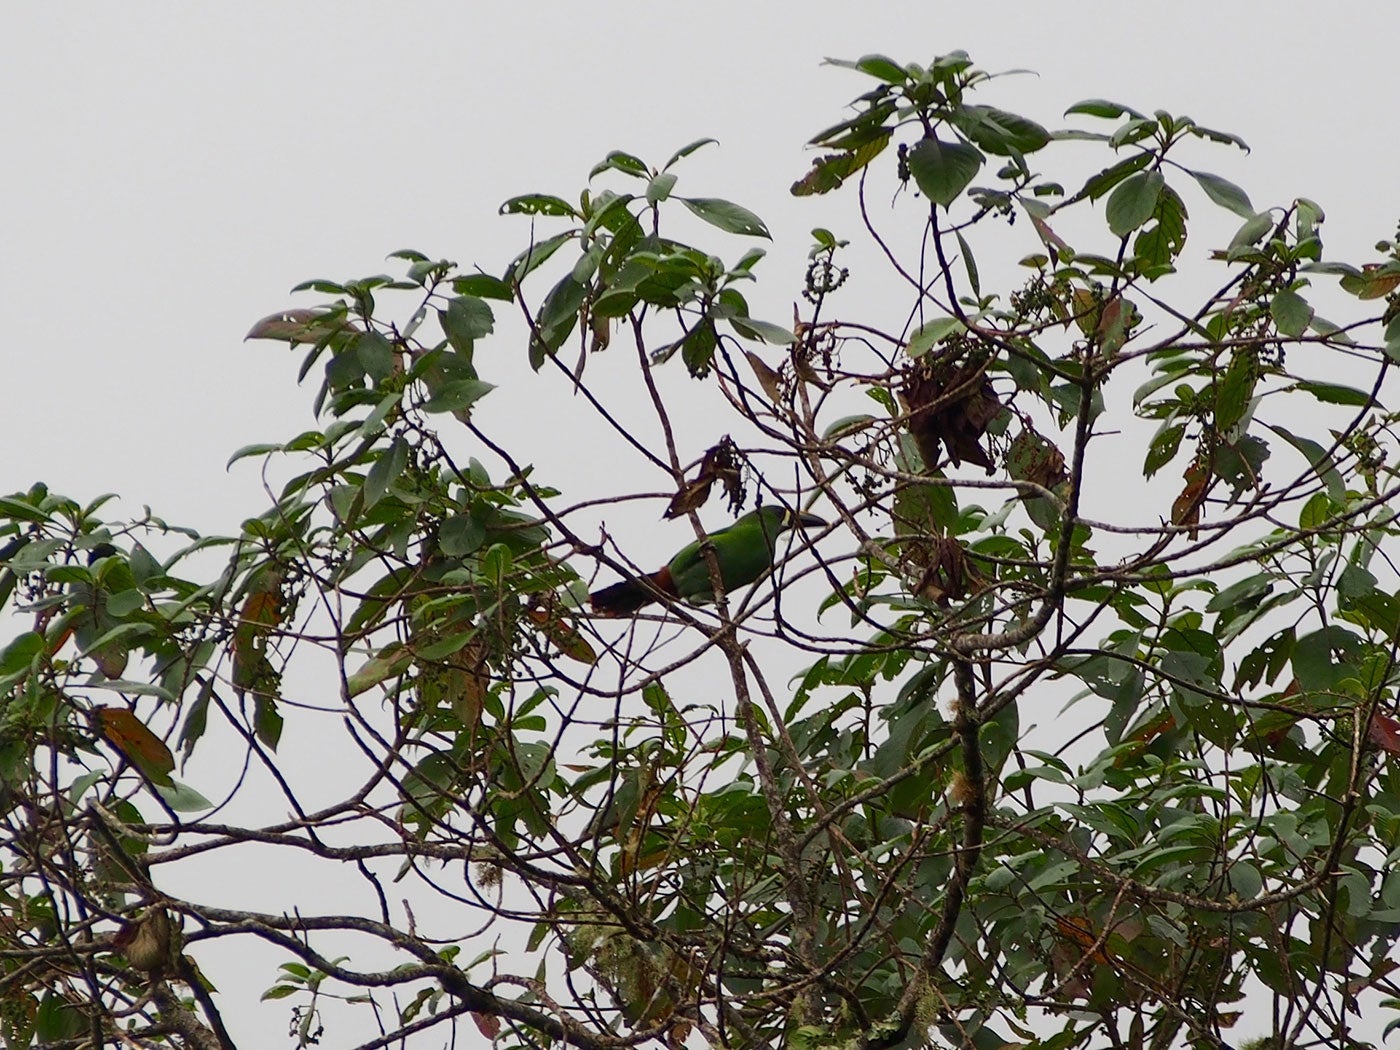 bird with a long, sturdy beak in a treetop